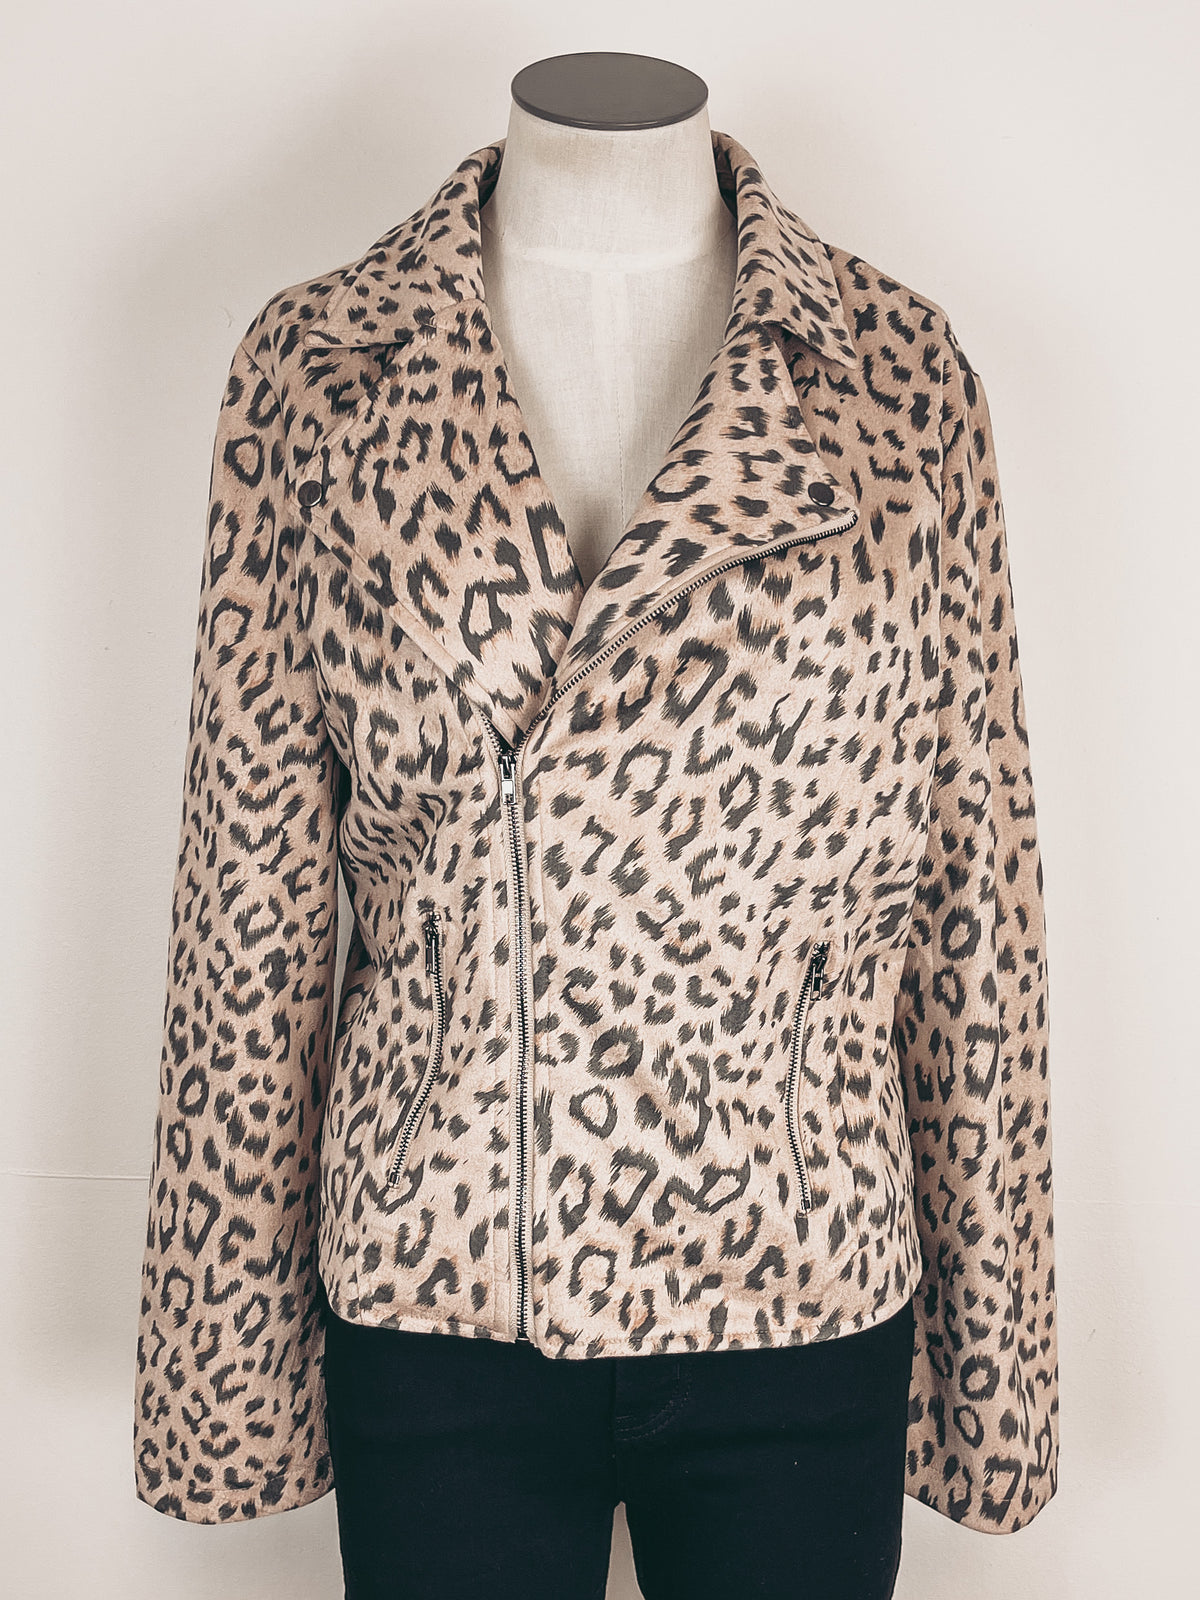 Leopard Print Moto Jacket